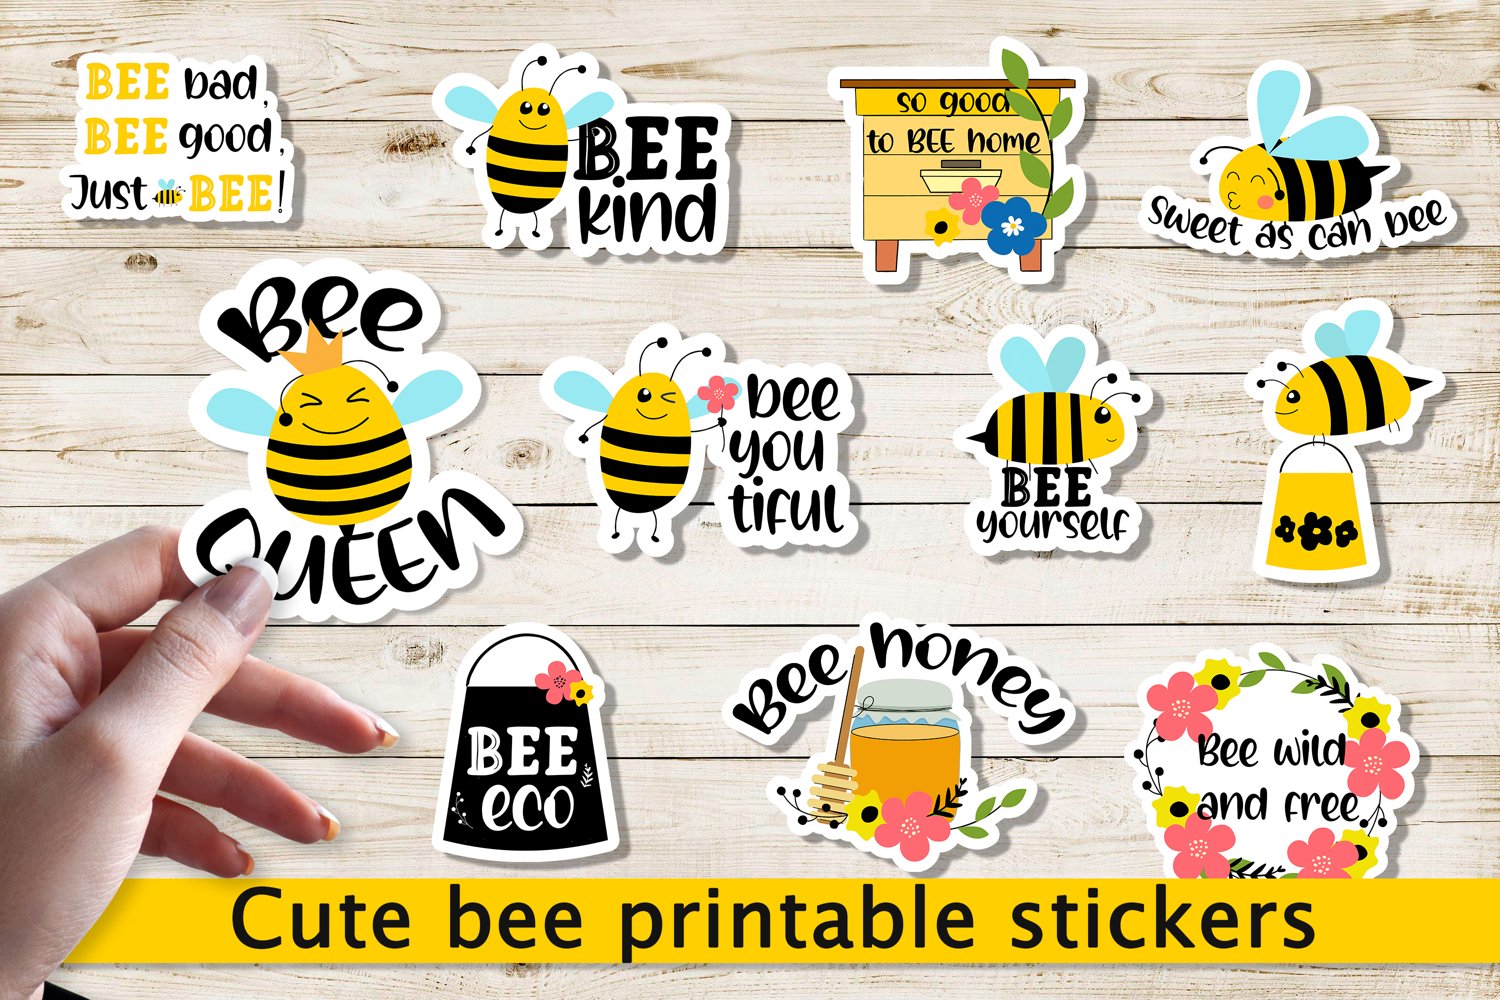 Cute bee printable stickers.